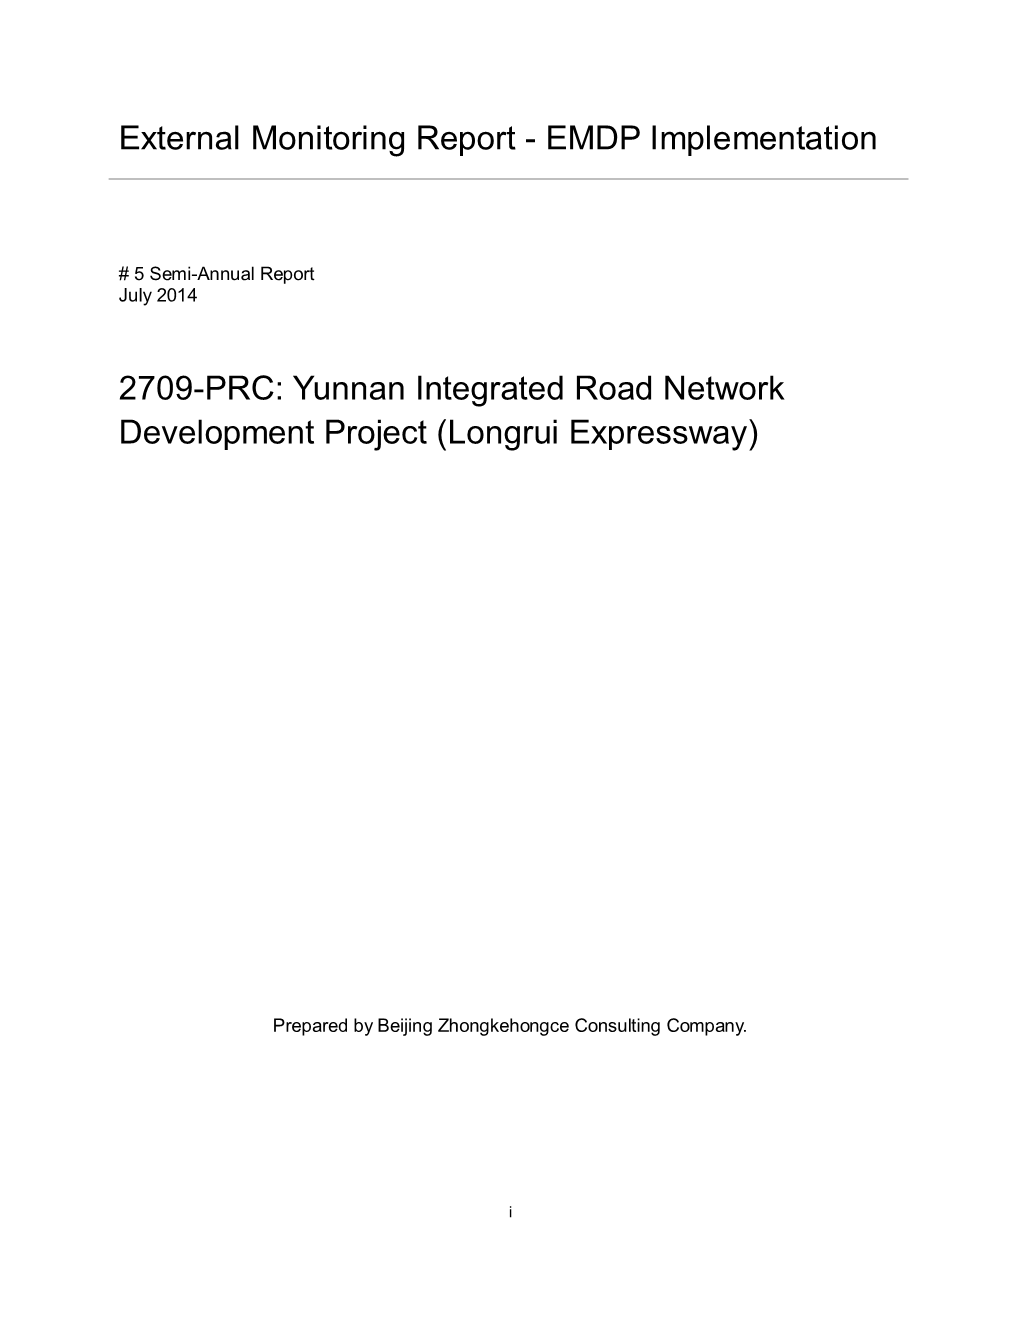 Yunnan Integrated Road Network Development Project (Longrui Expressway)